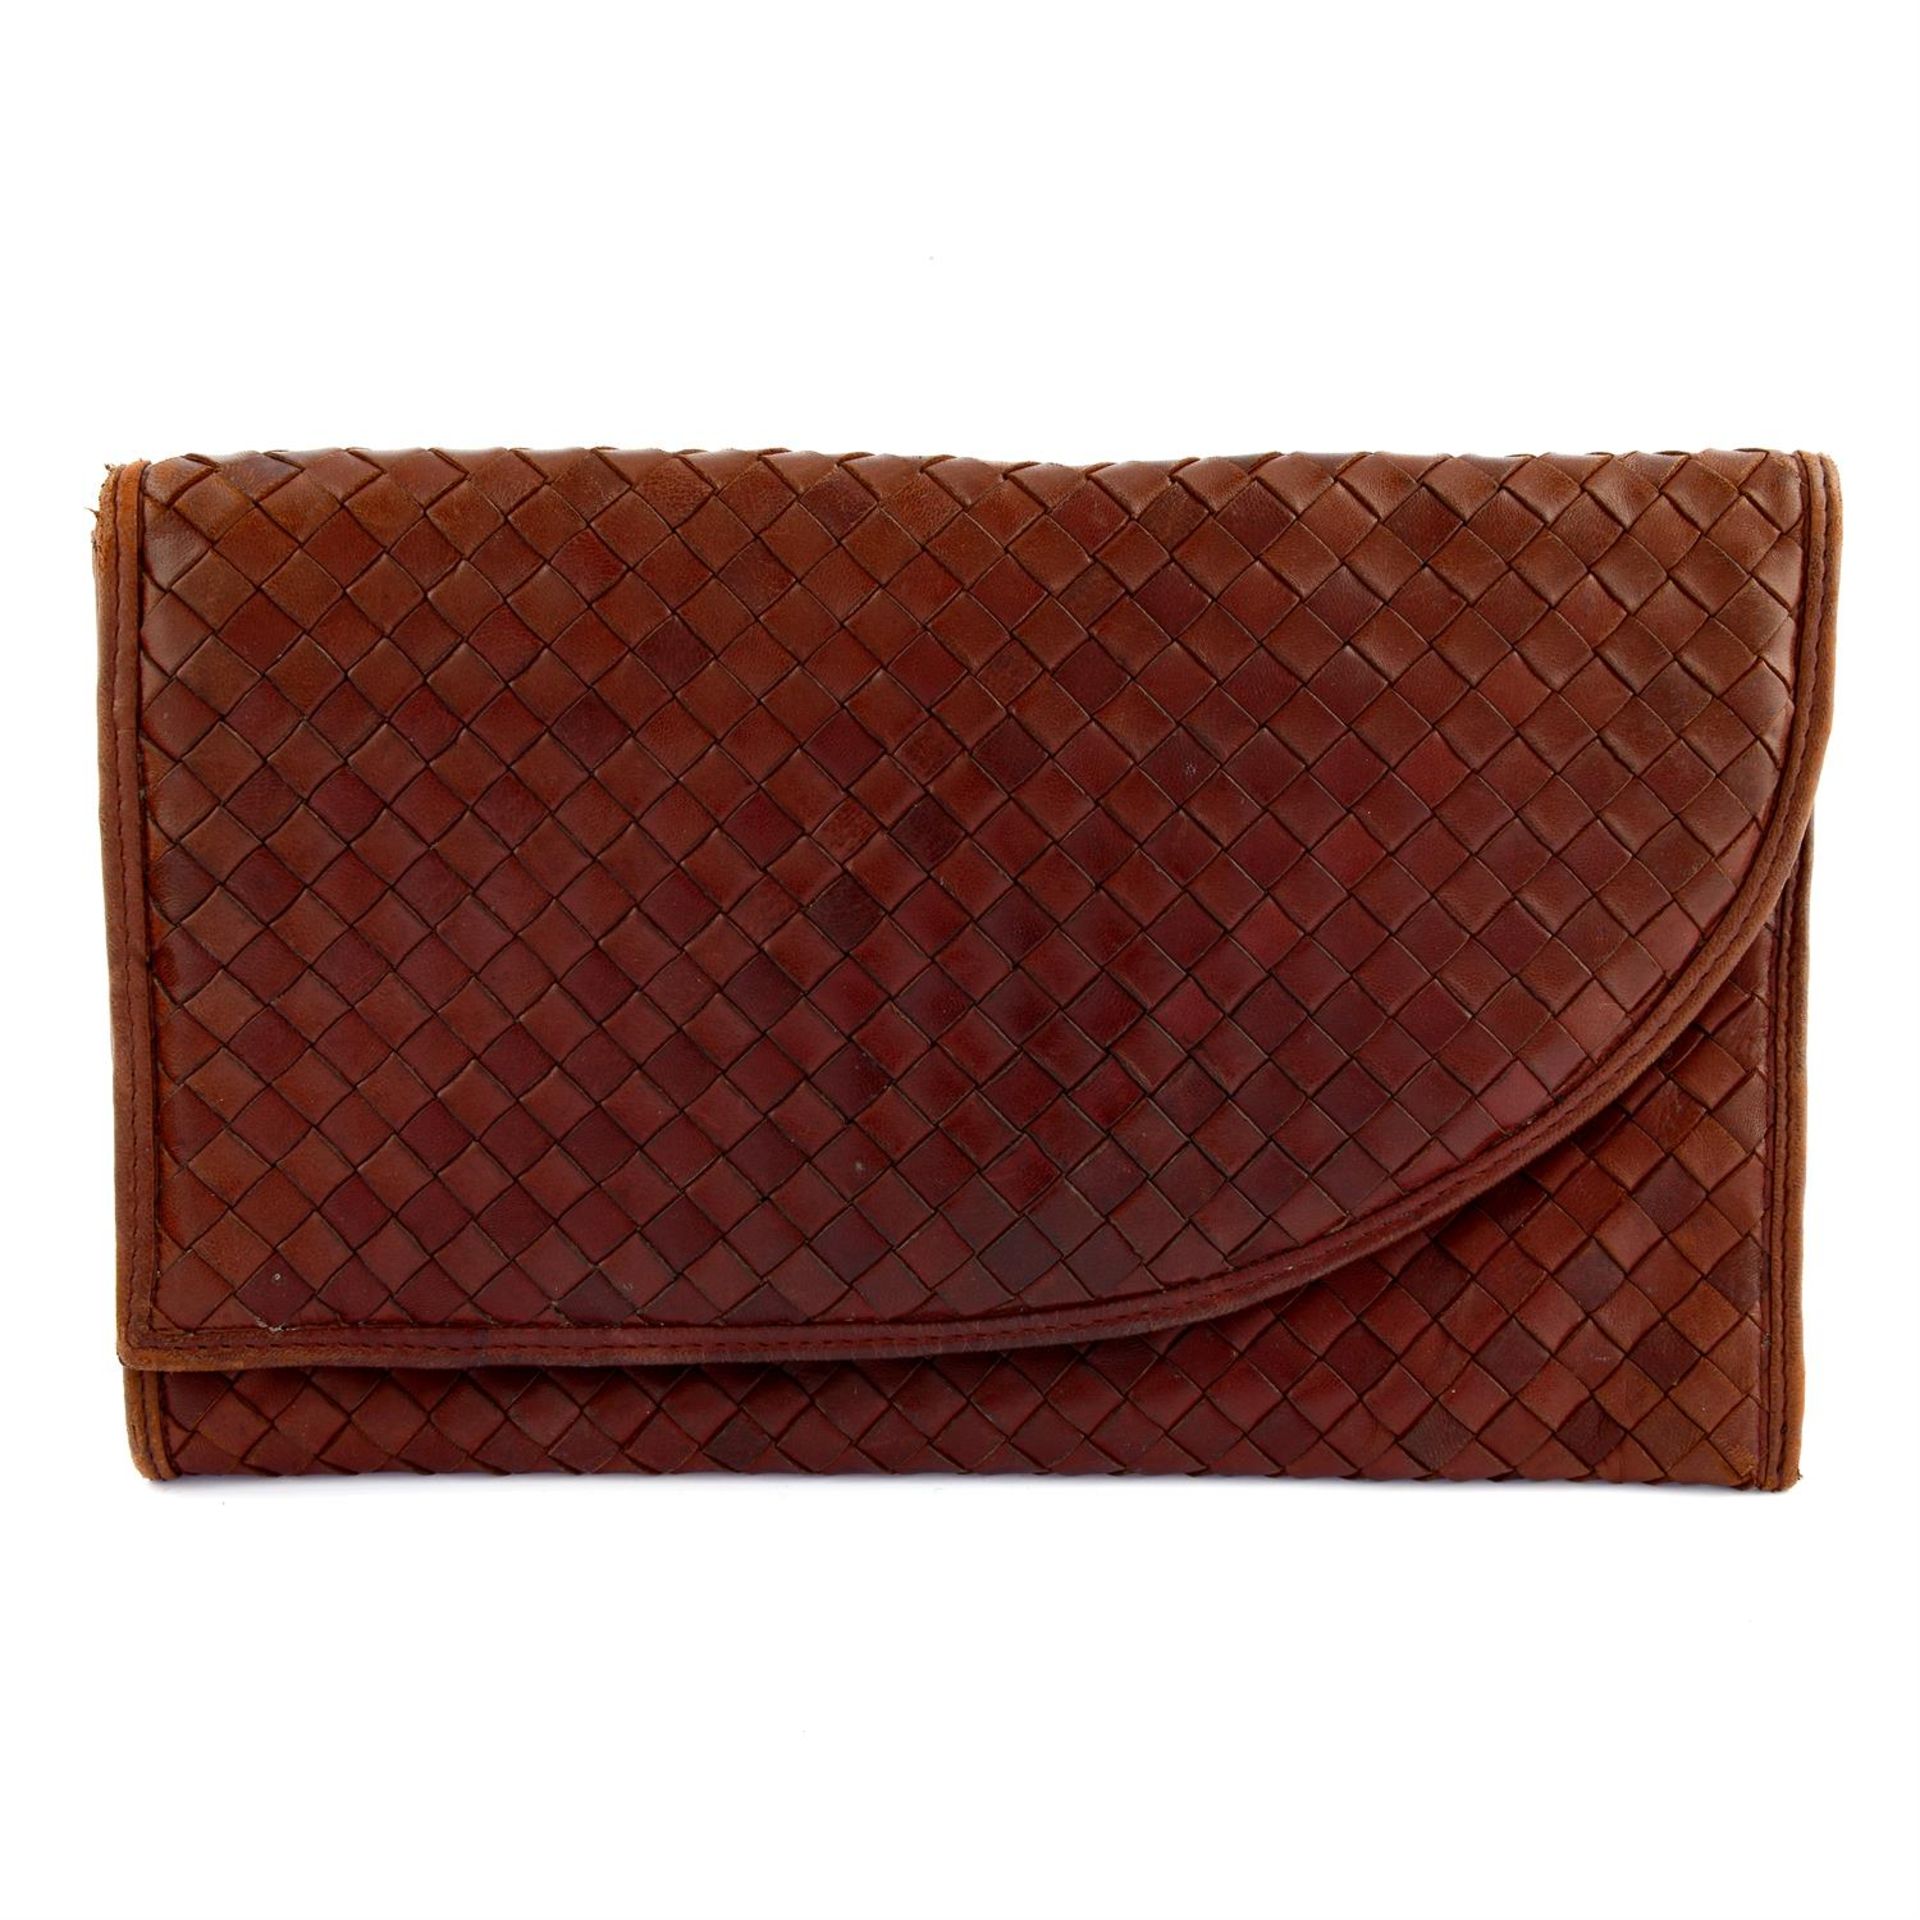 BOTTEGA VENETA - a brown leather clutch bag.